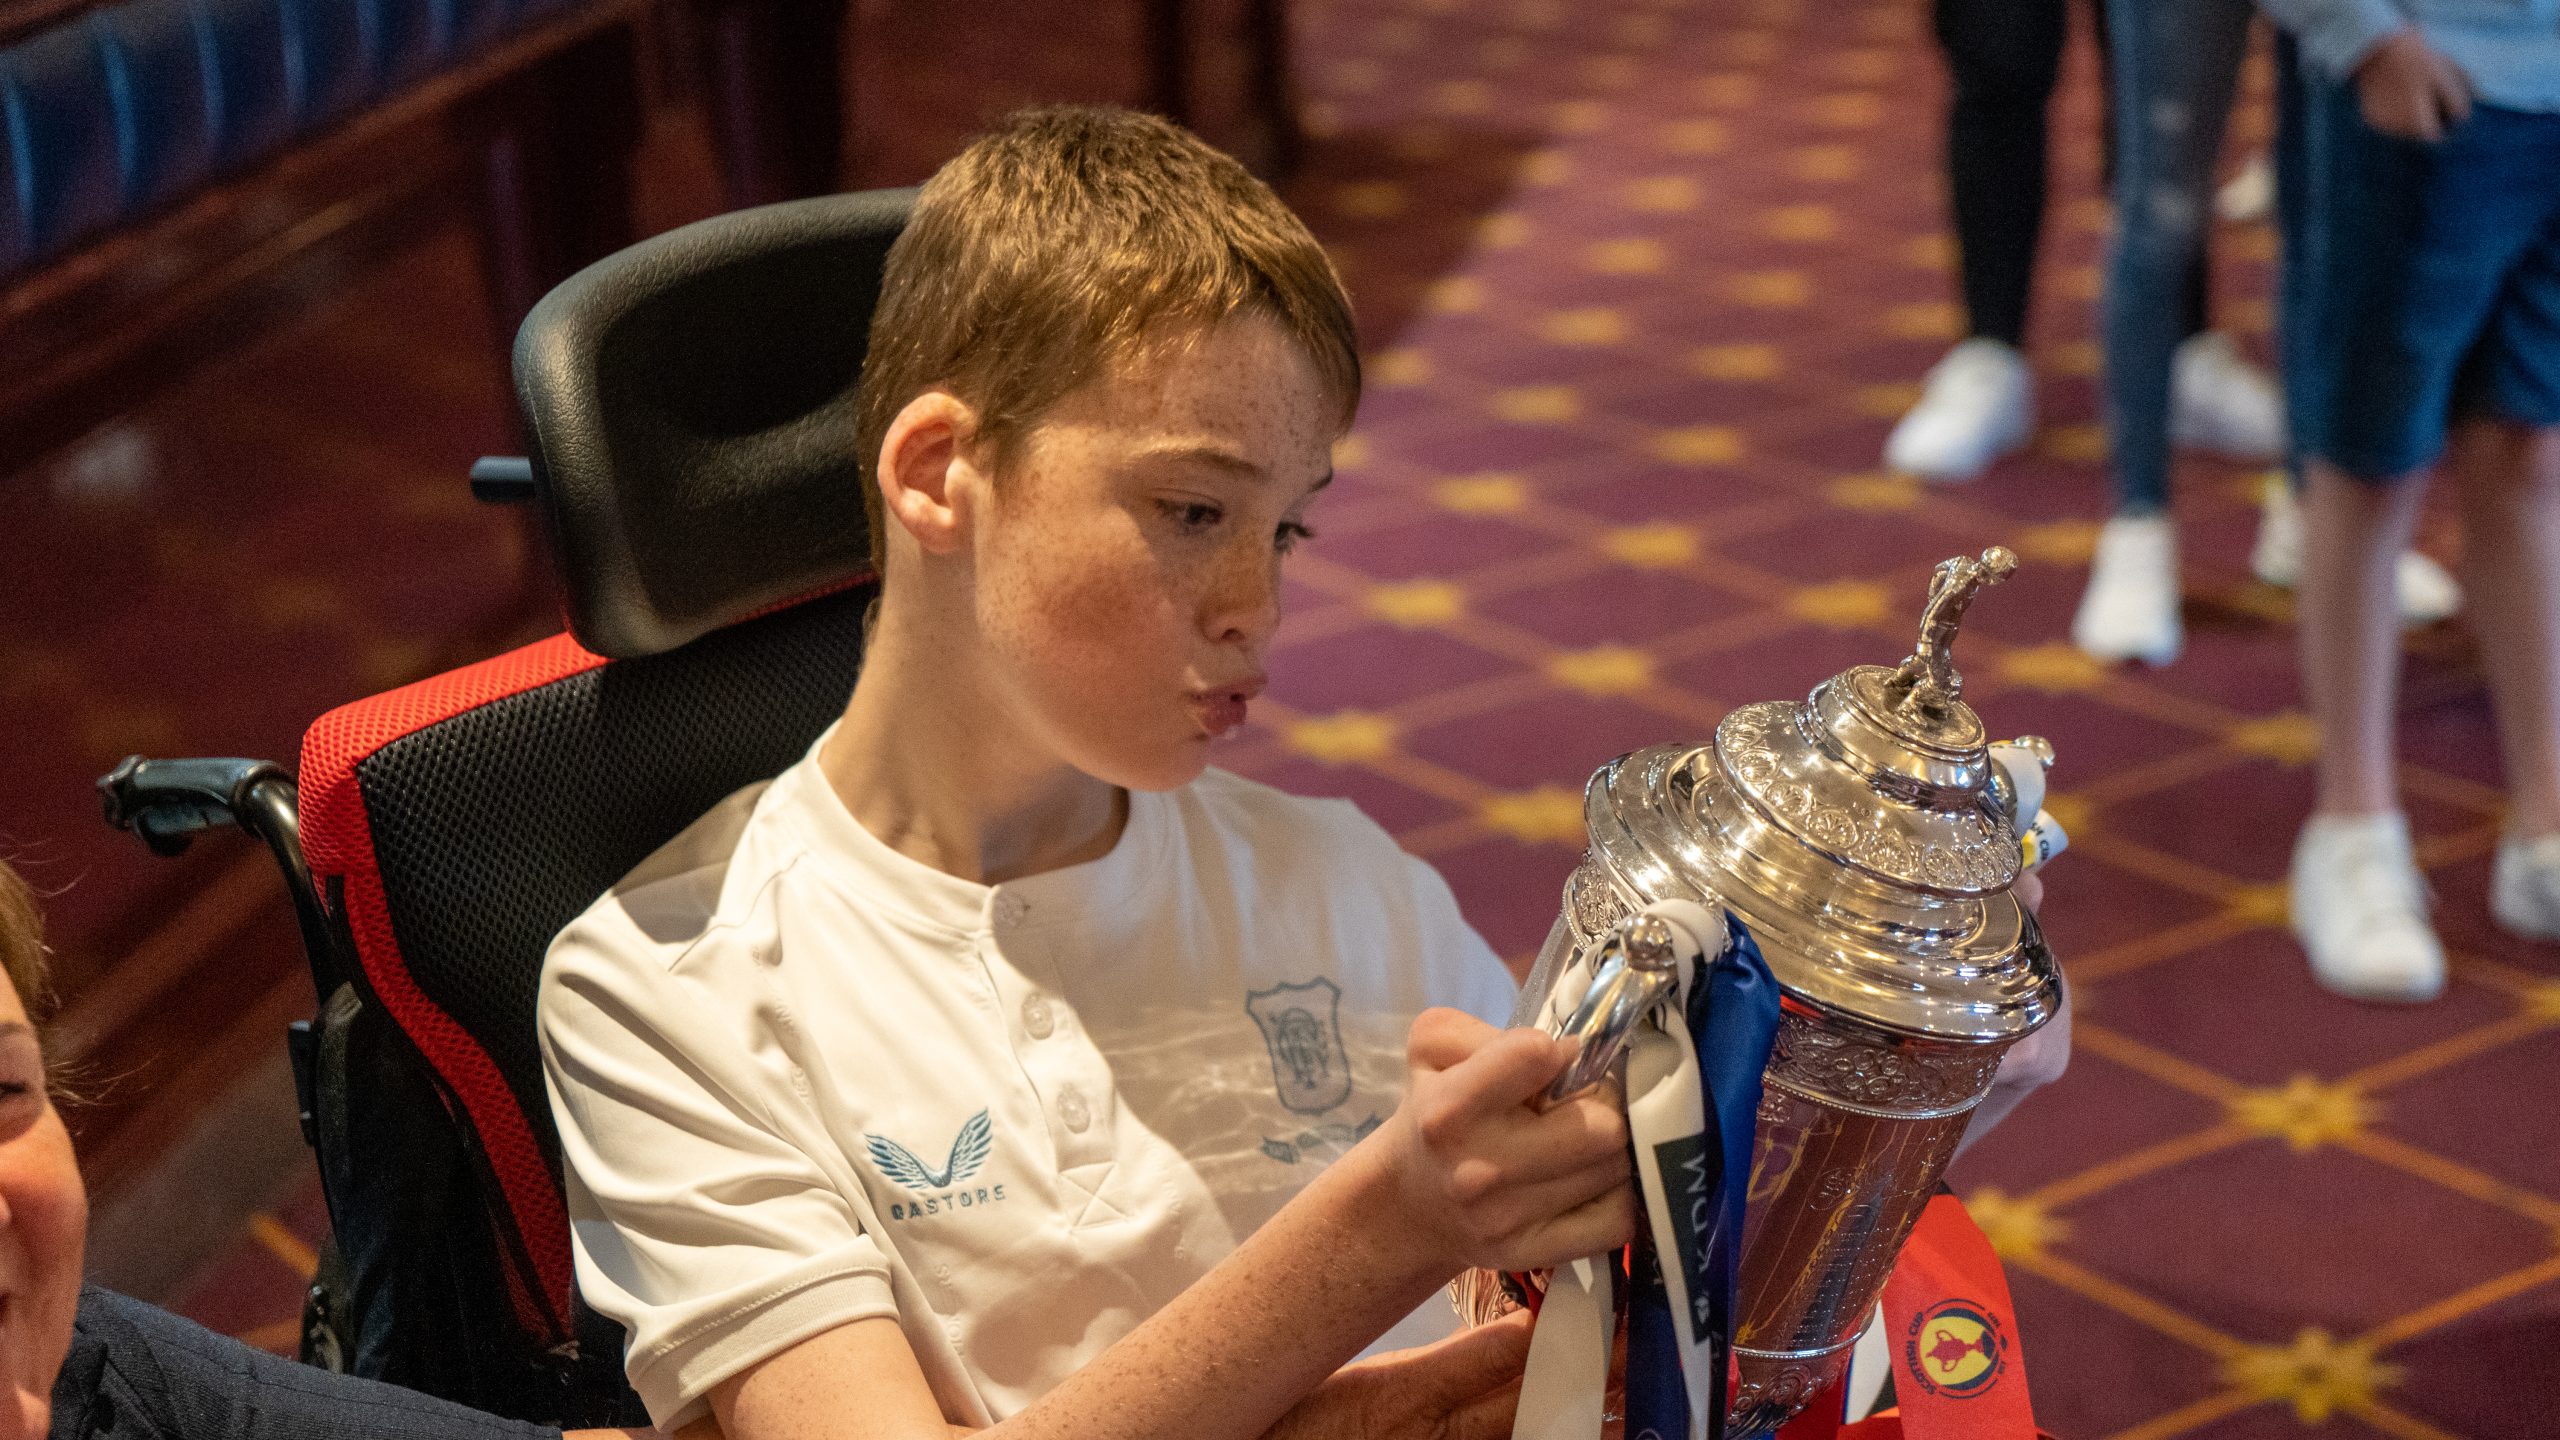 Boy in wheelchair holding trophy